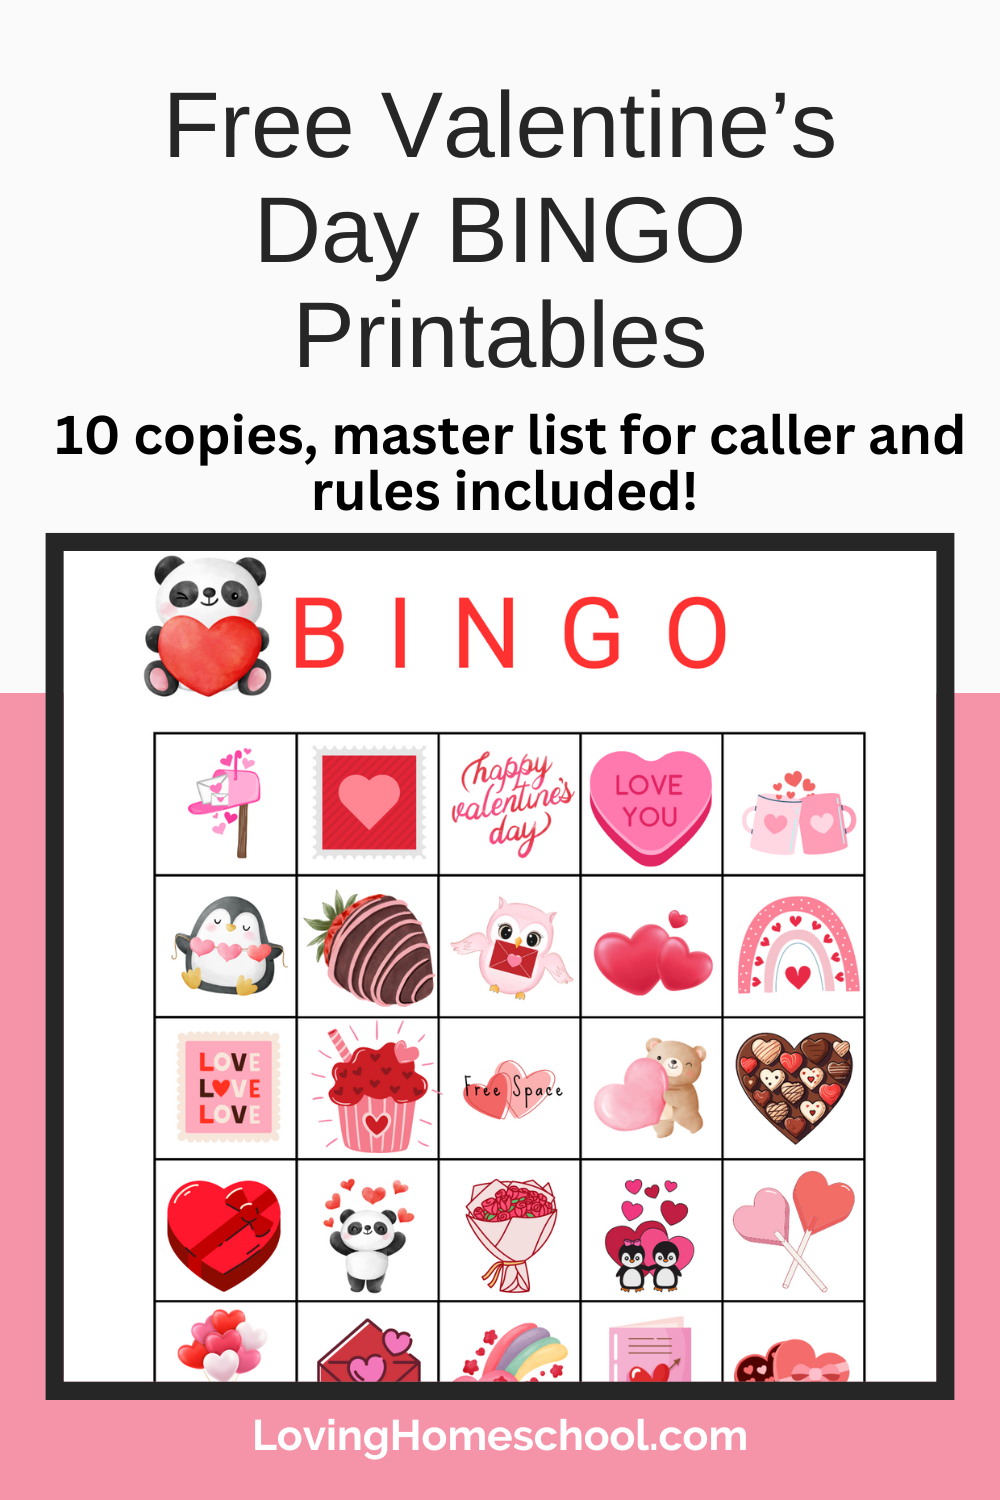 Free Valentine’s Day BINGO Printables